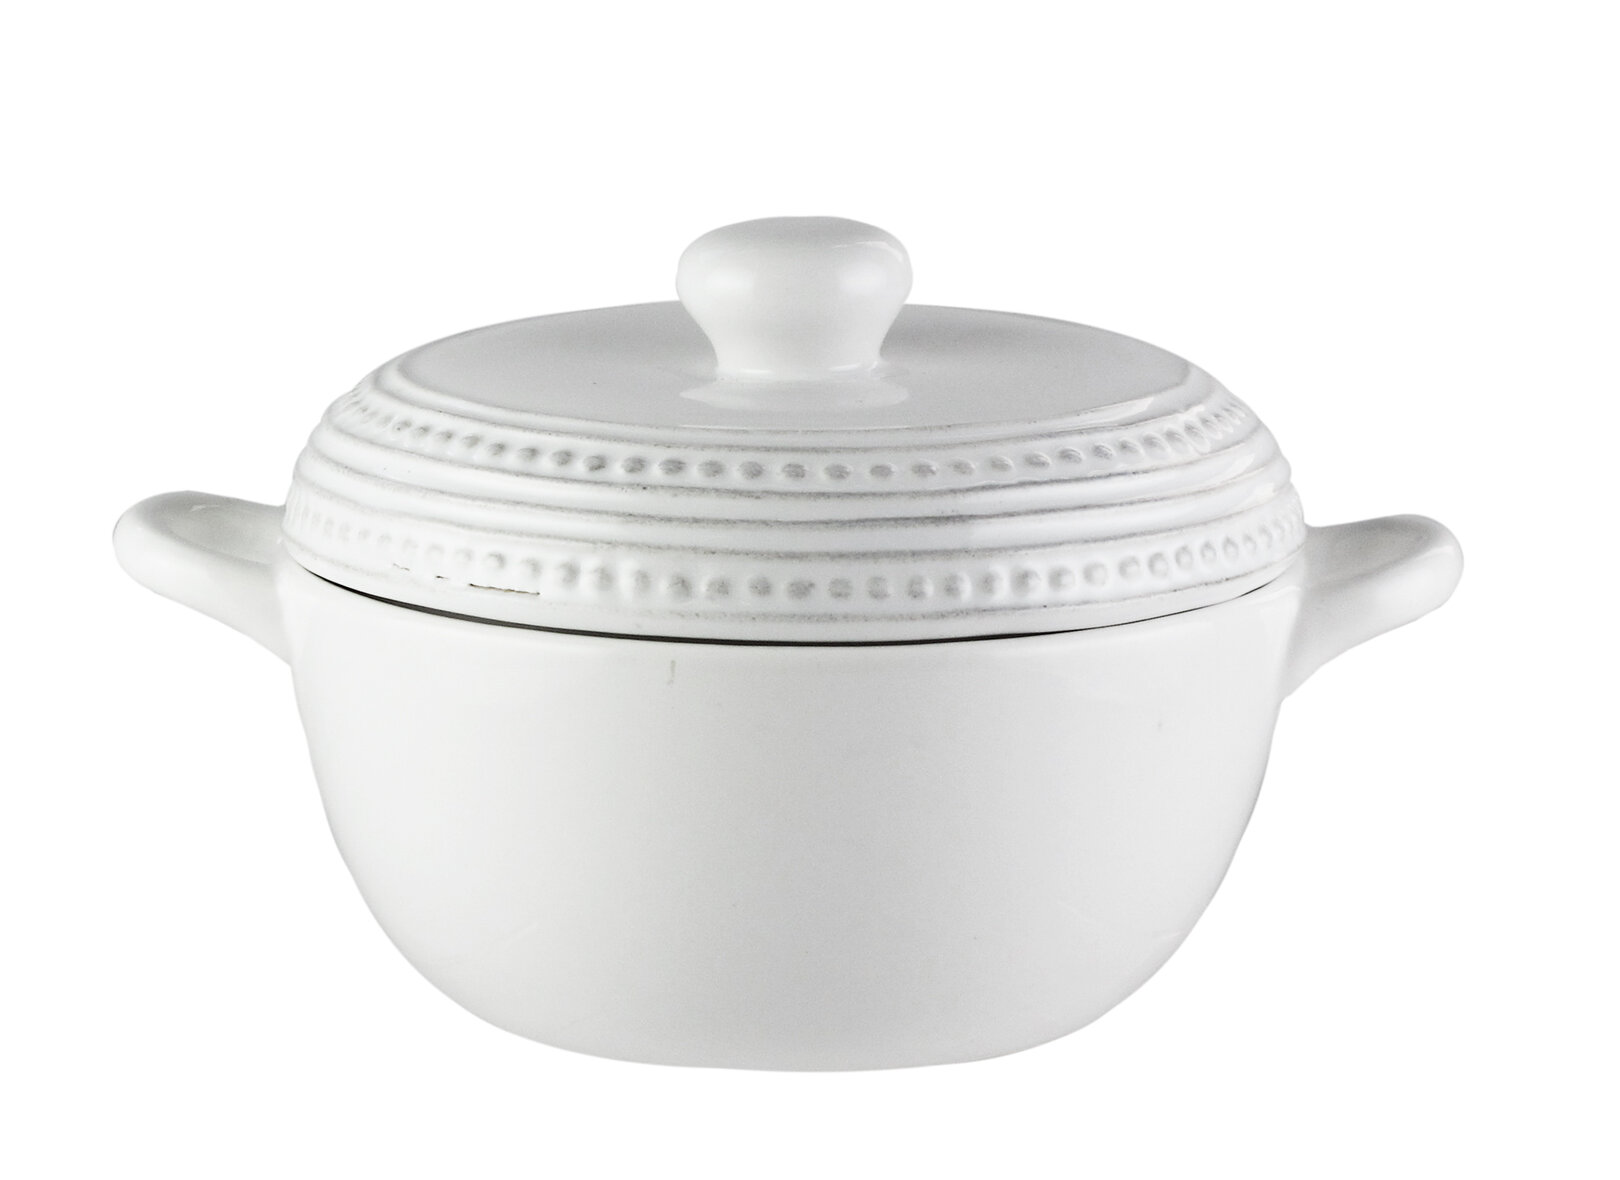 ceramic casserole dish with handles